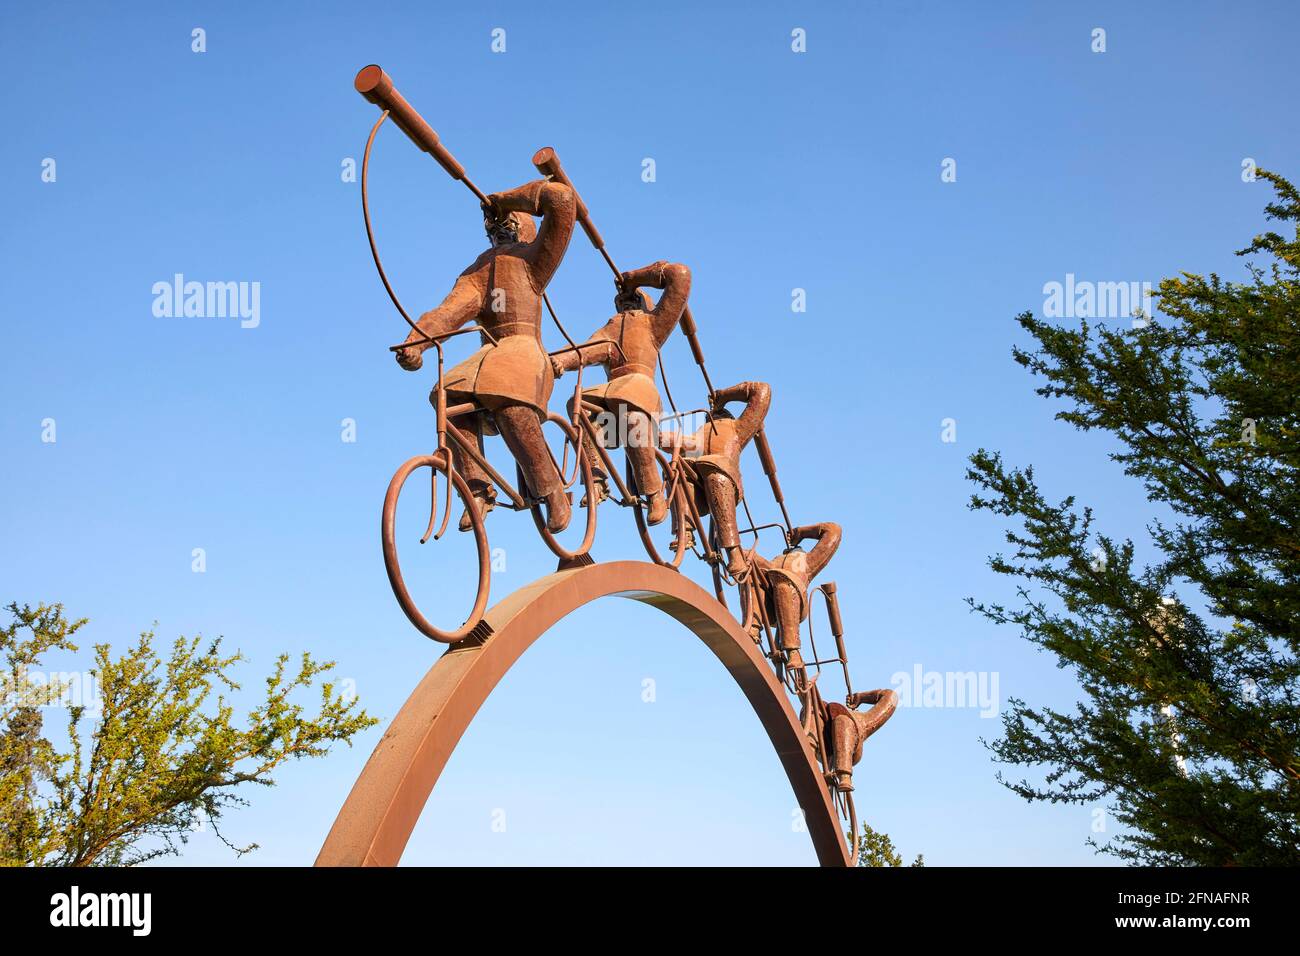 La sculpture de la Busqueda dans le parc de Bicentenario Vitacura Parque Bicentenario by Hernan Puelma à Santiago Chili Amérique du Sud Banque D'Images